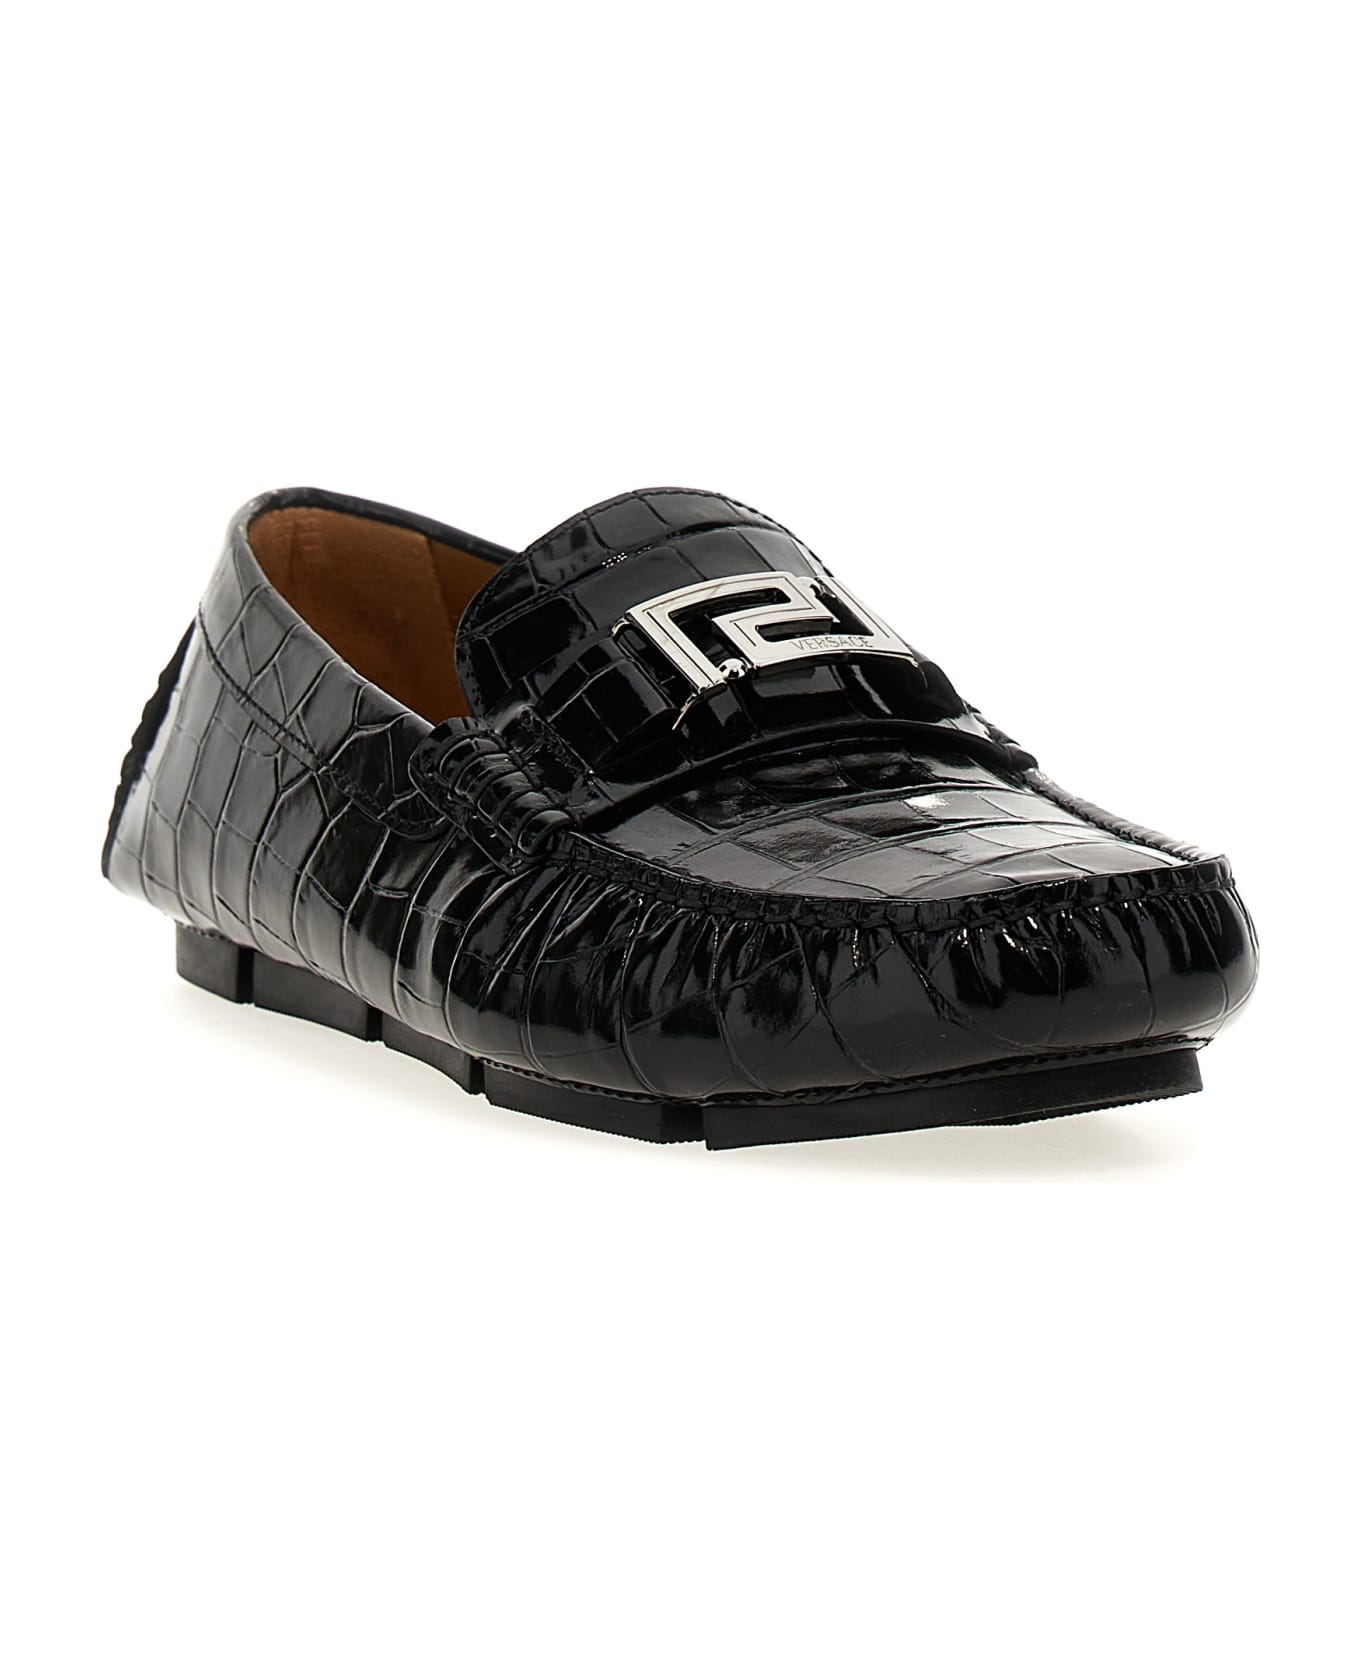 Versace 'greca' Loafers - Black